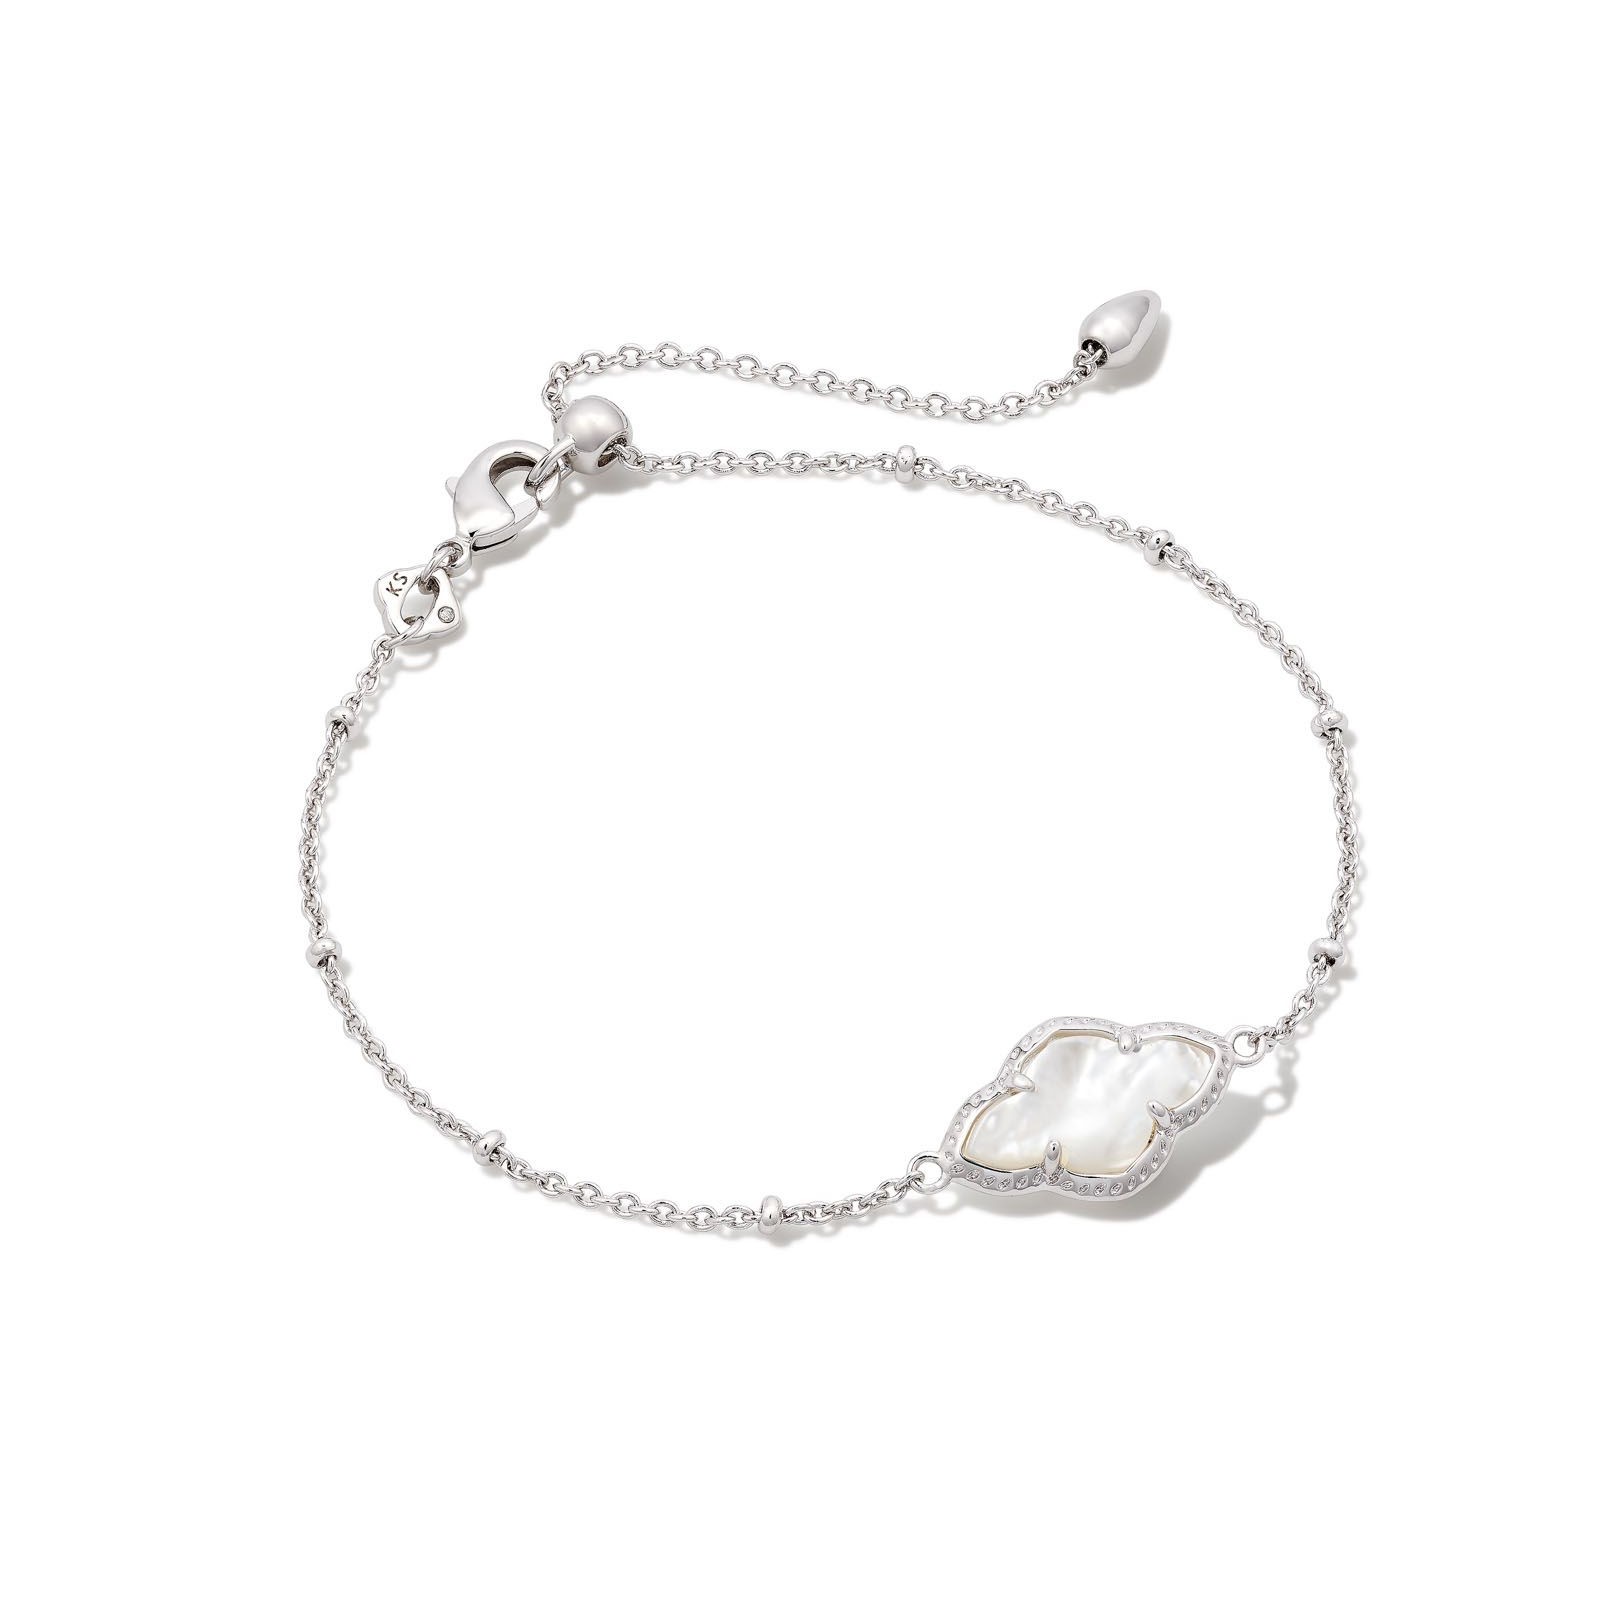 Kendra Scott Abbie Satellite Chain Bracelet in Silver Ivory Mother of Pearl